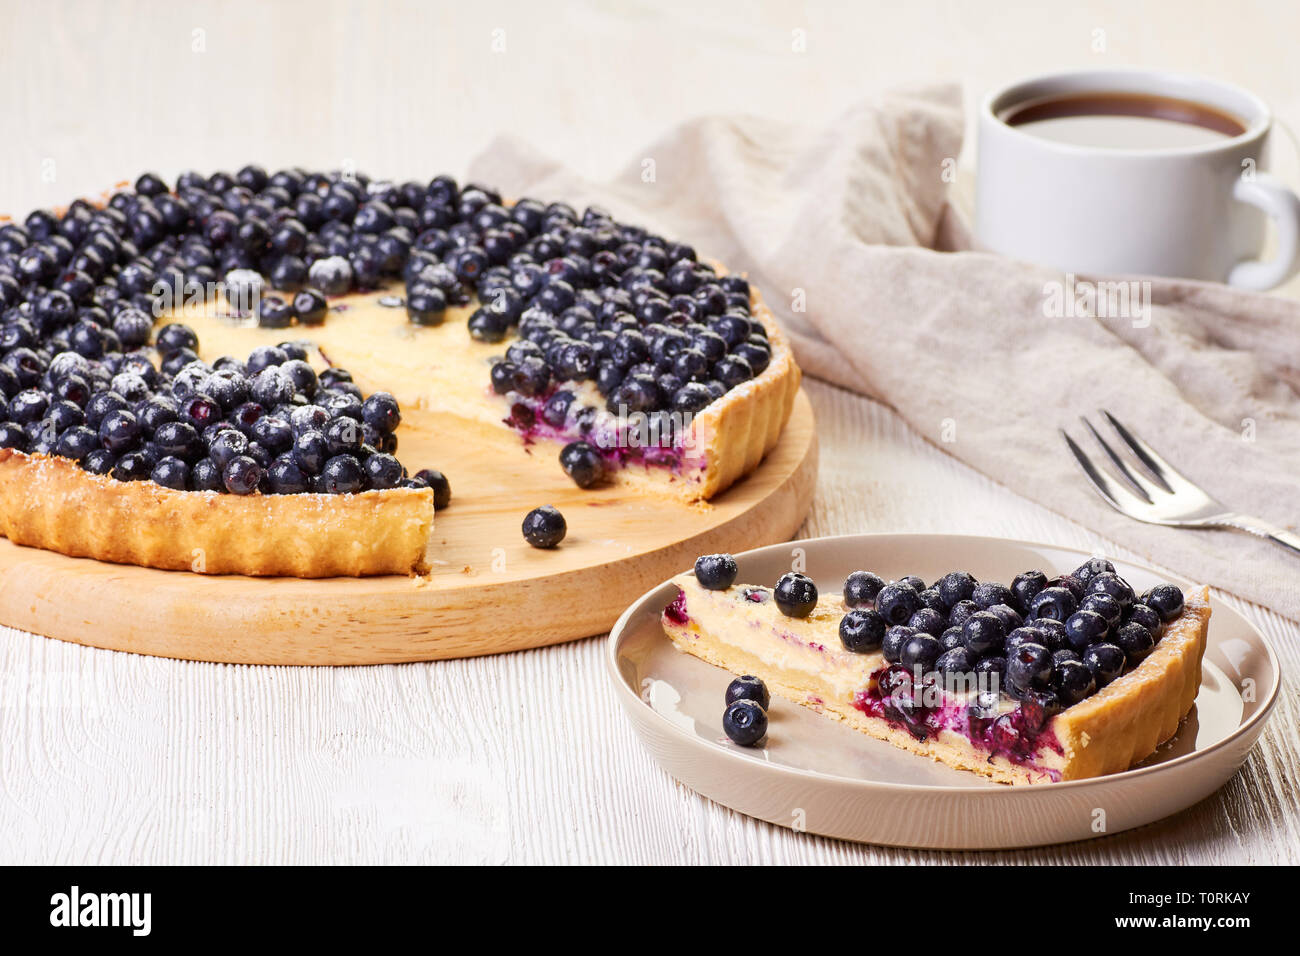 Homemade custard tart with blueberries on white wooden table Stock Photo